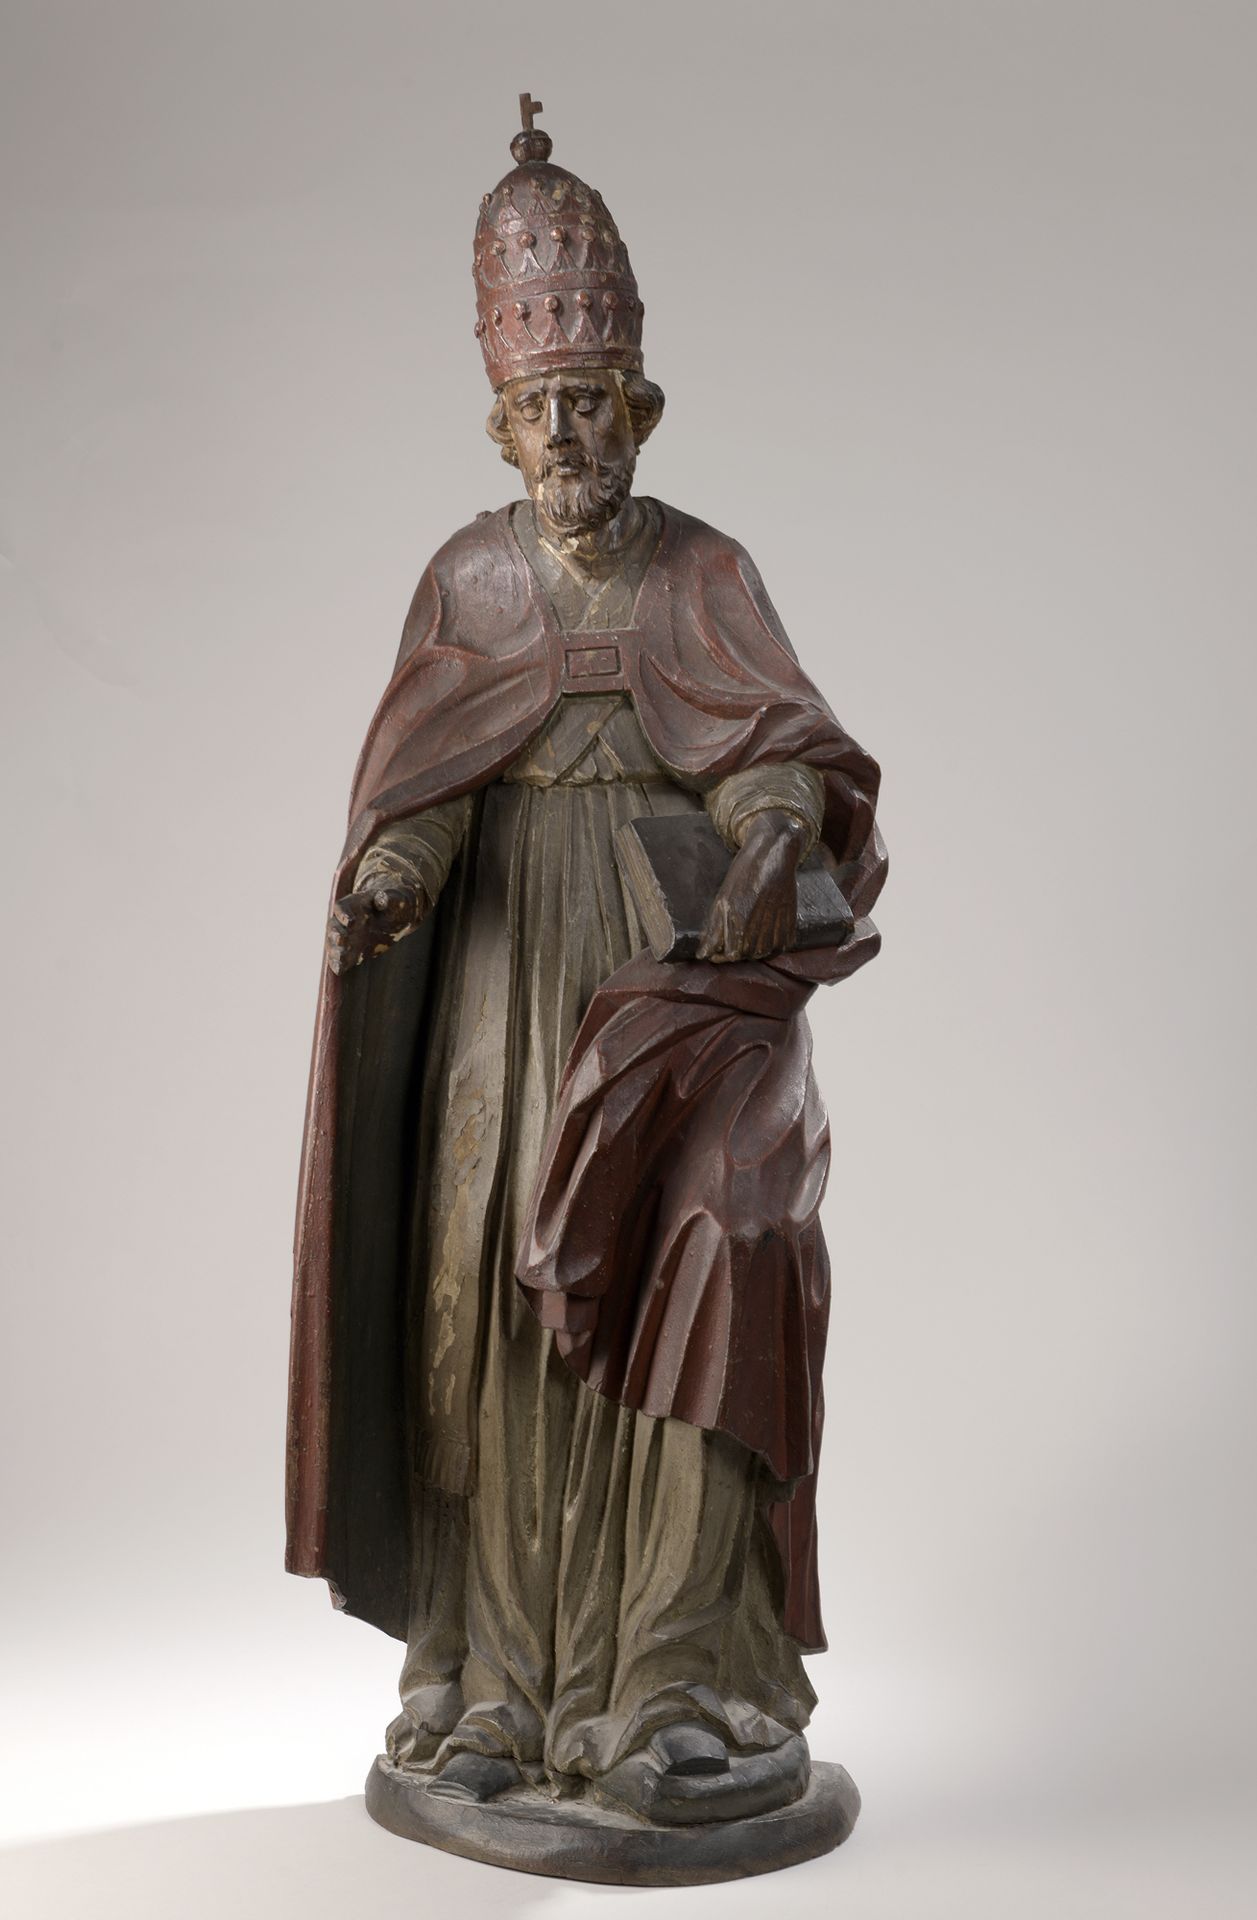 Null 法国或弗莱米什学校，18世纪

戴着教皇头冠的圣彼得

多色木浮雕，空心背。

H.114厘米

损坏、缺失的部件和修复。